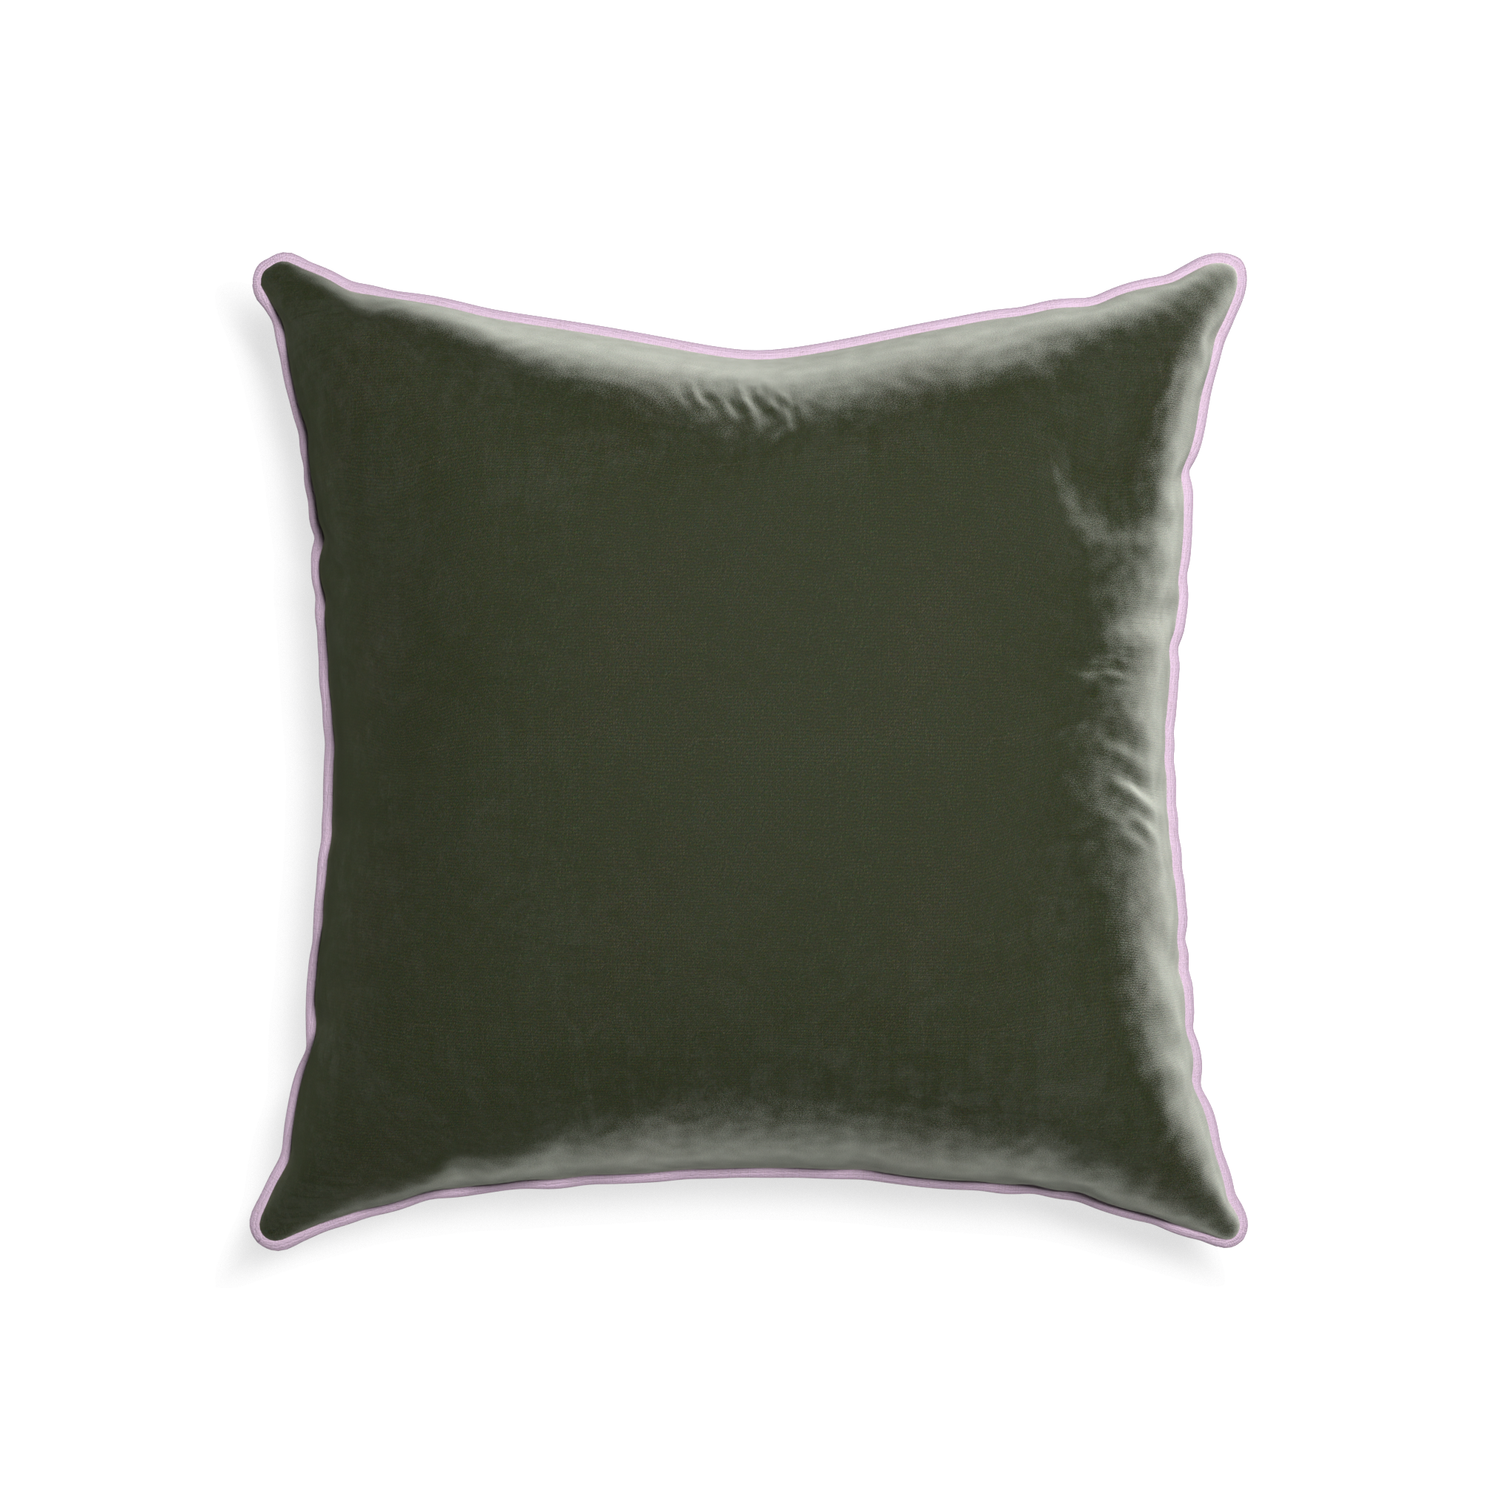 22-square fern velvet custom pillow with l piping on white background